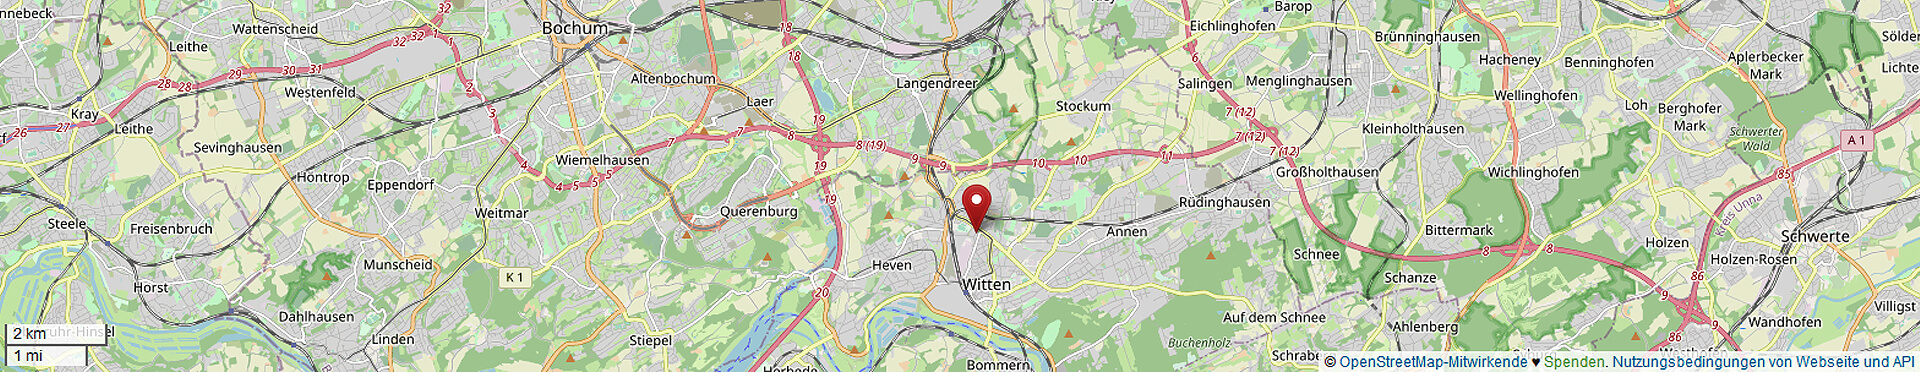 Bomar Germany - Routenplaner - Google Maps Verlinkung